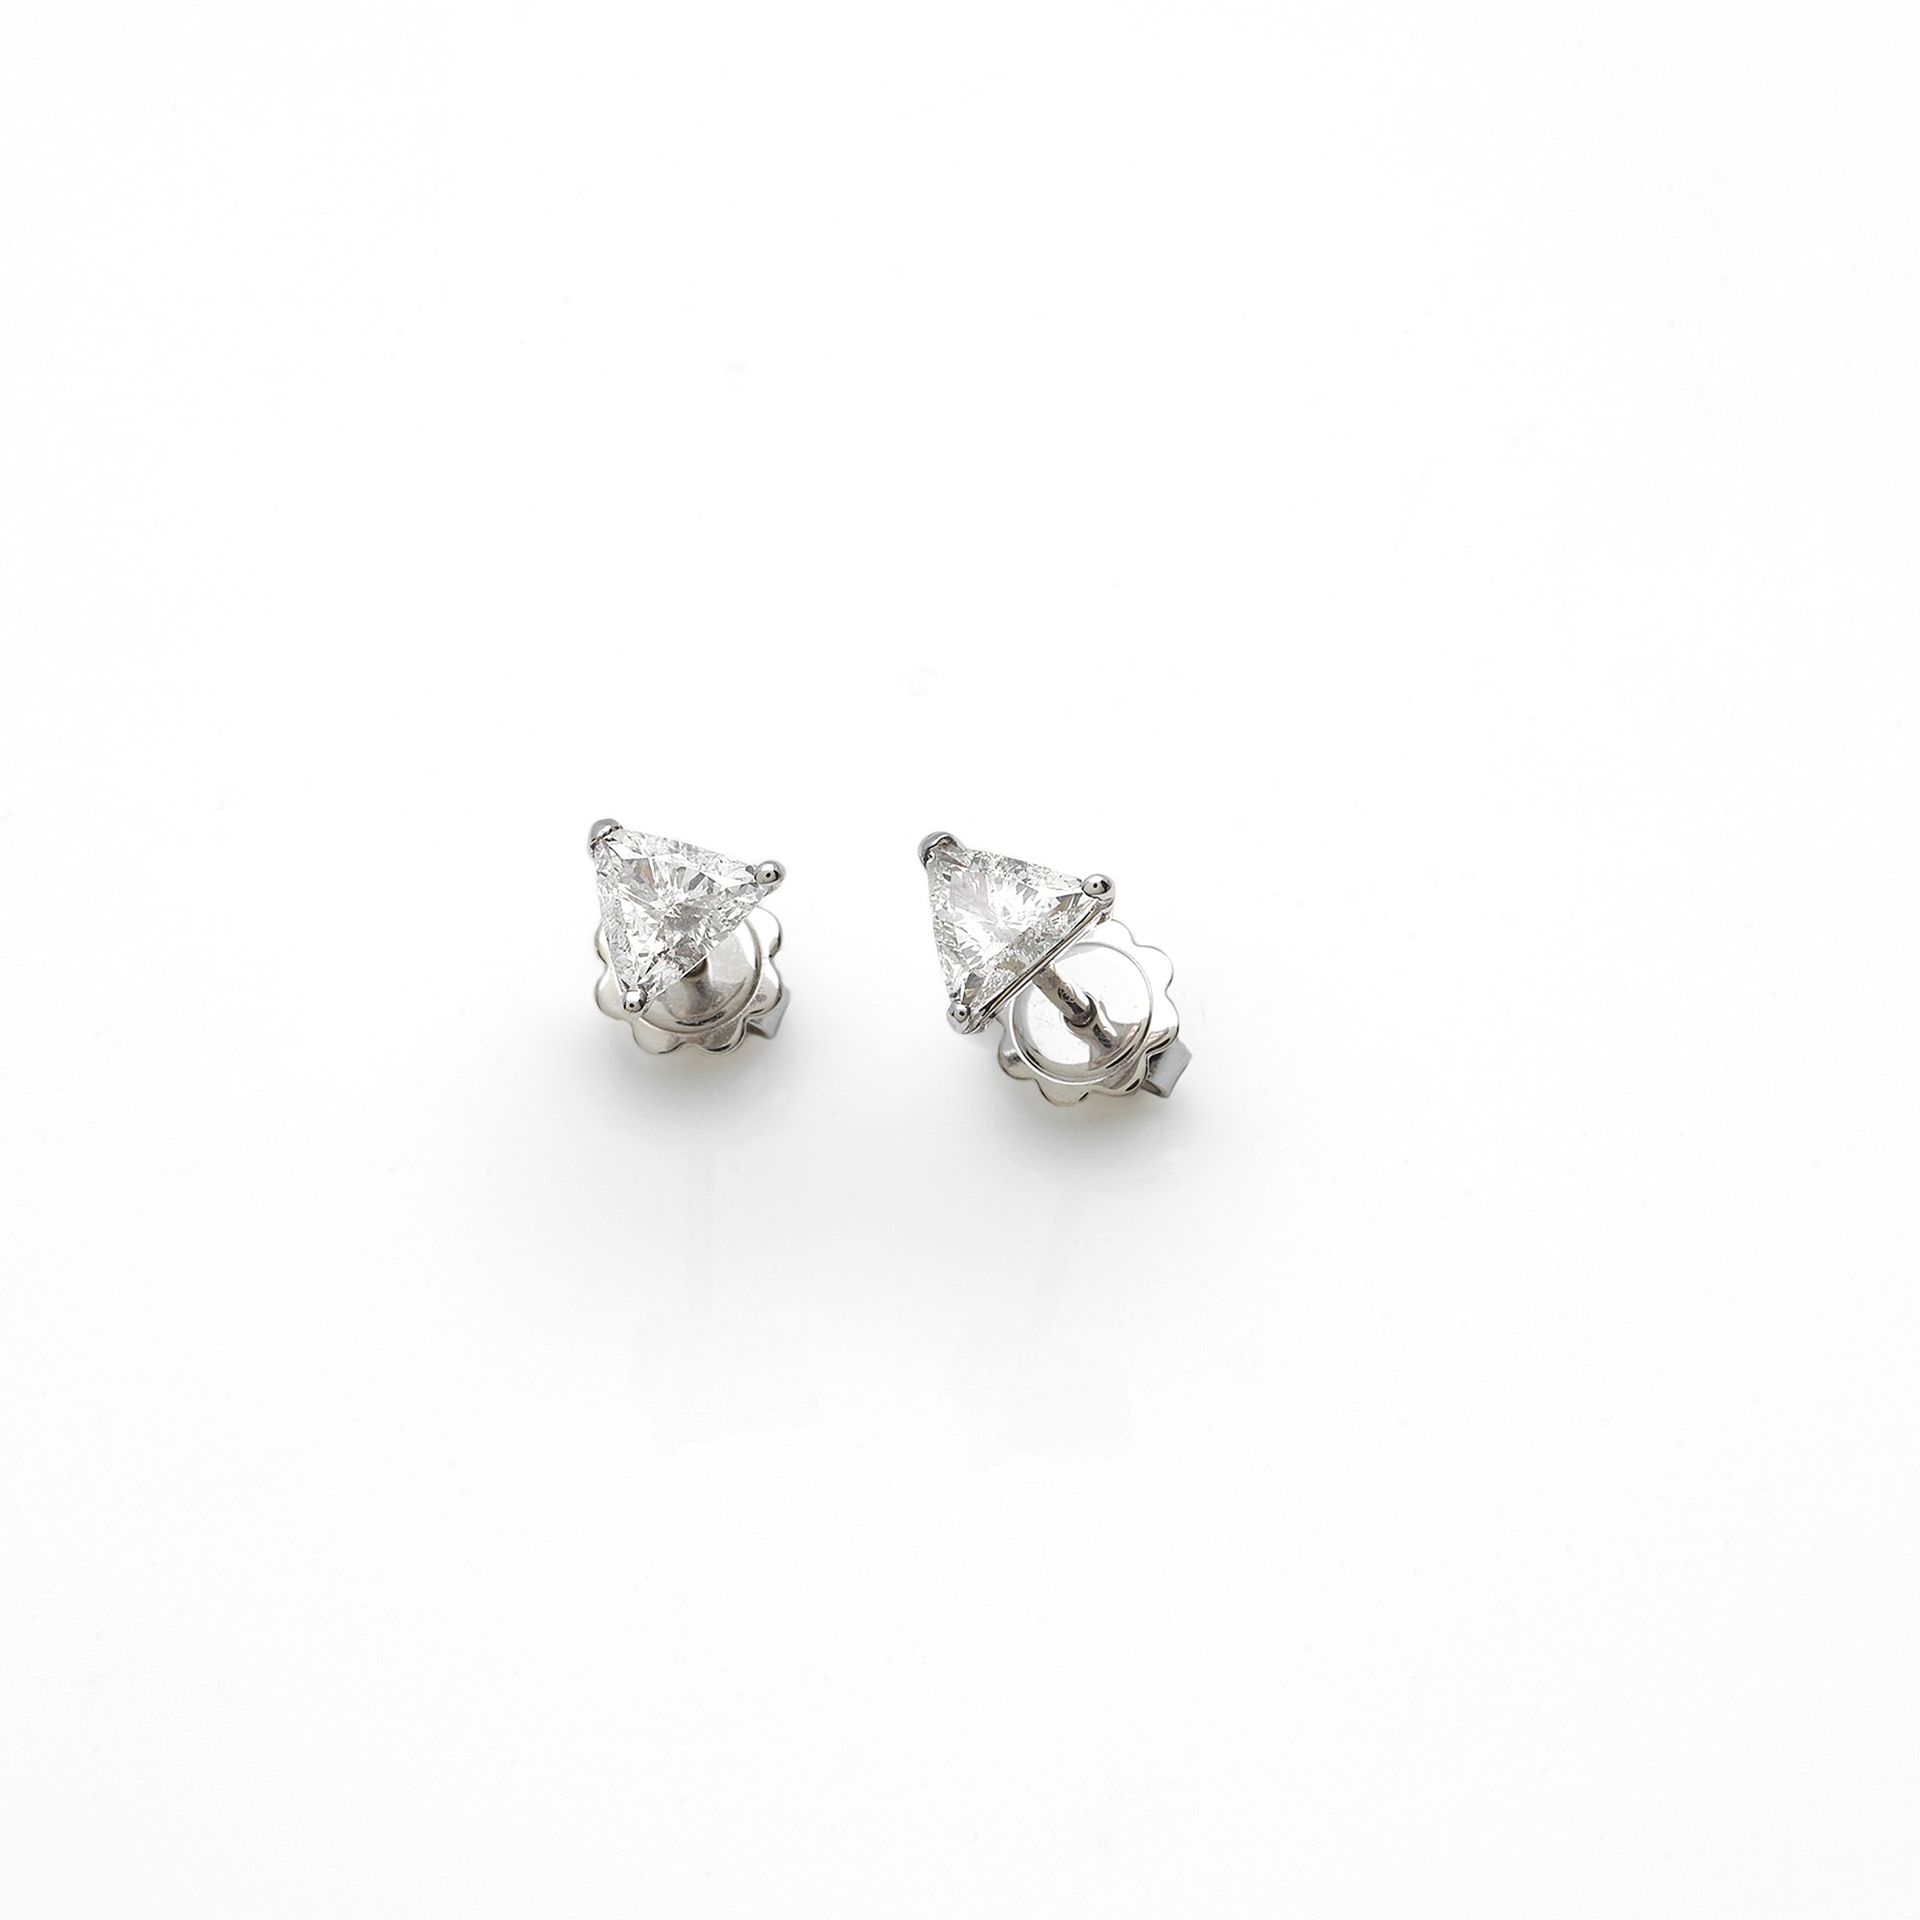 Null 18K白金耳环，镶有两颗三角形钻石，共计0.90克拉，重量2.33克

18K白金耳环，镶有两颗三角形钻石，共计约0.90克拉